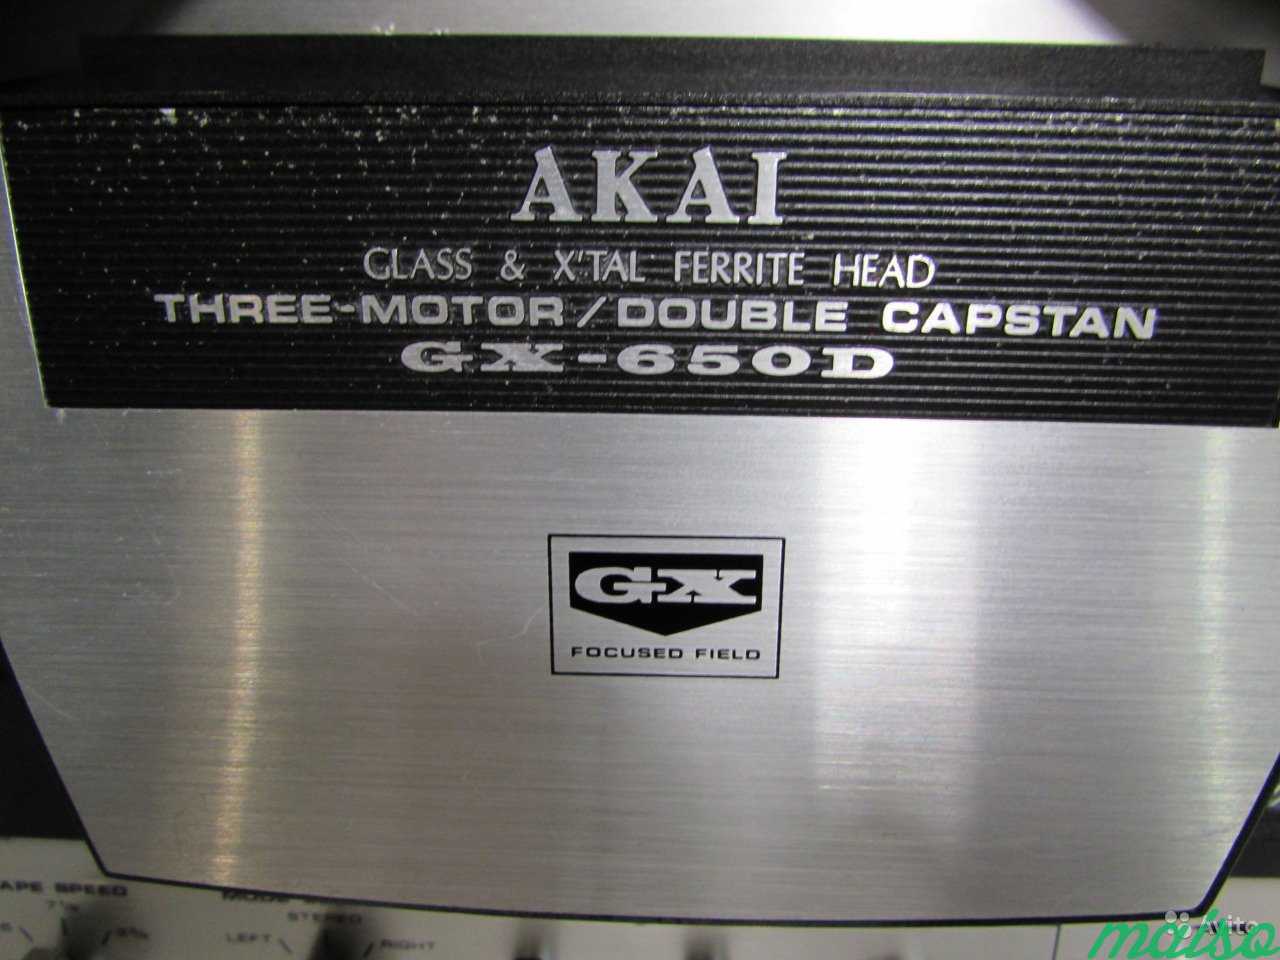 Akai GX-650D Катушечный магнитофон Japan 1976г в Санкт-Петербурге. Фото 4